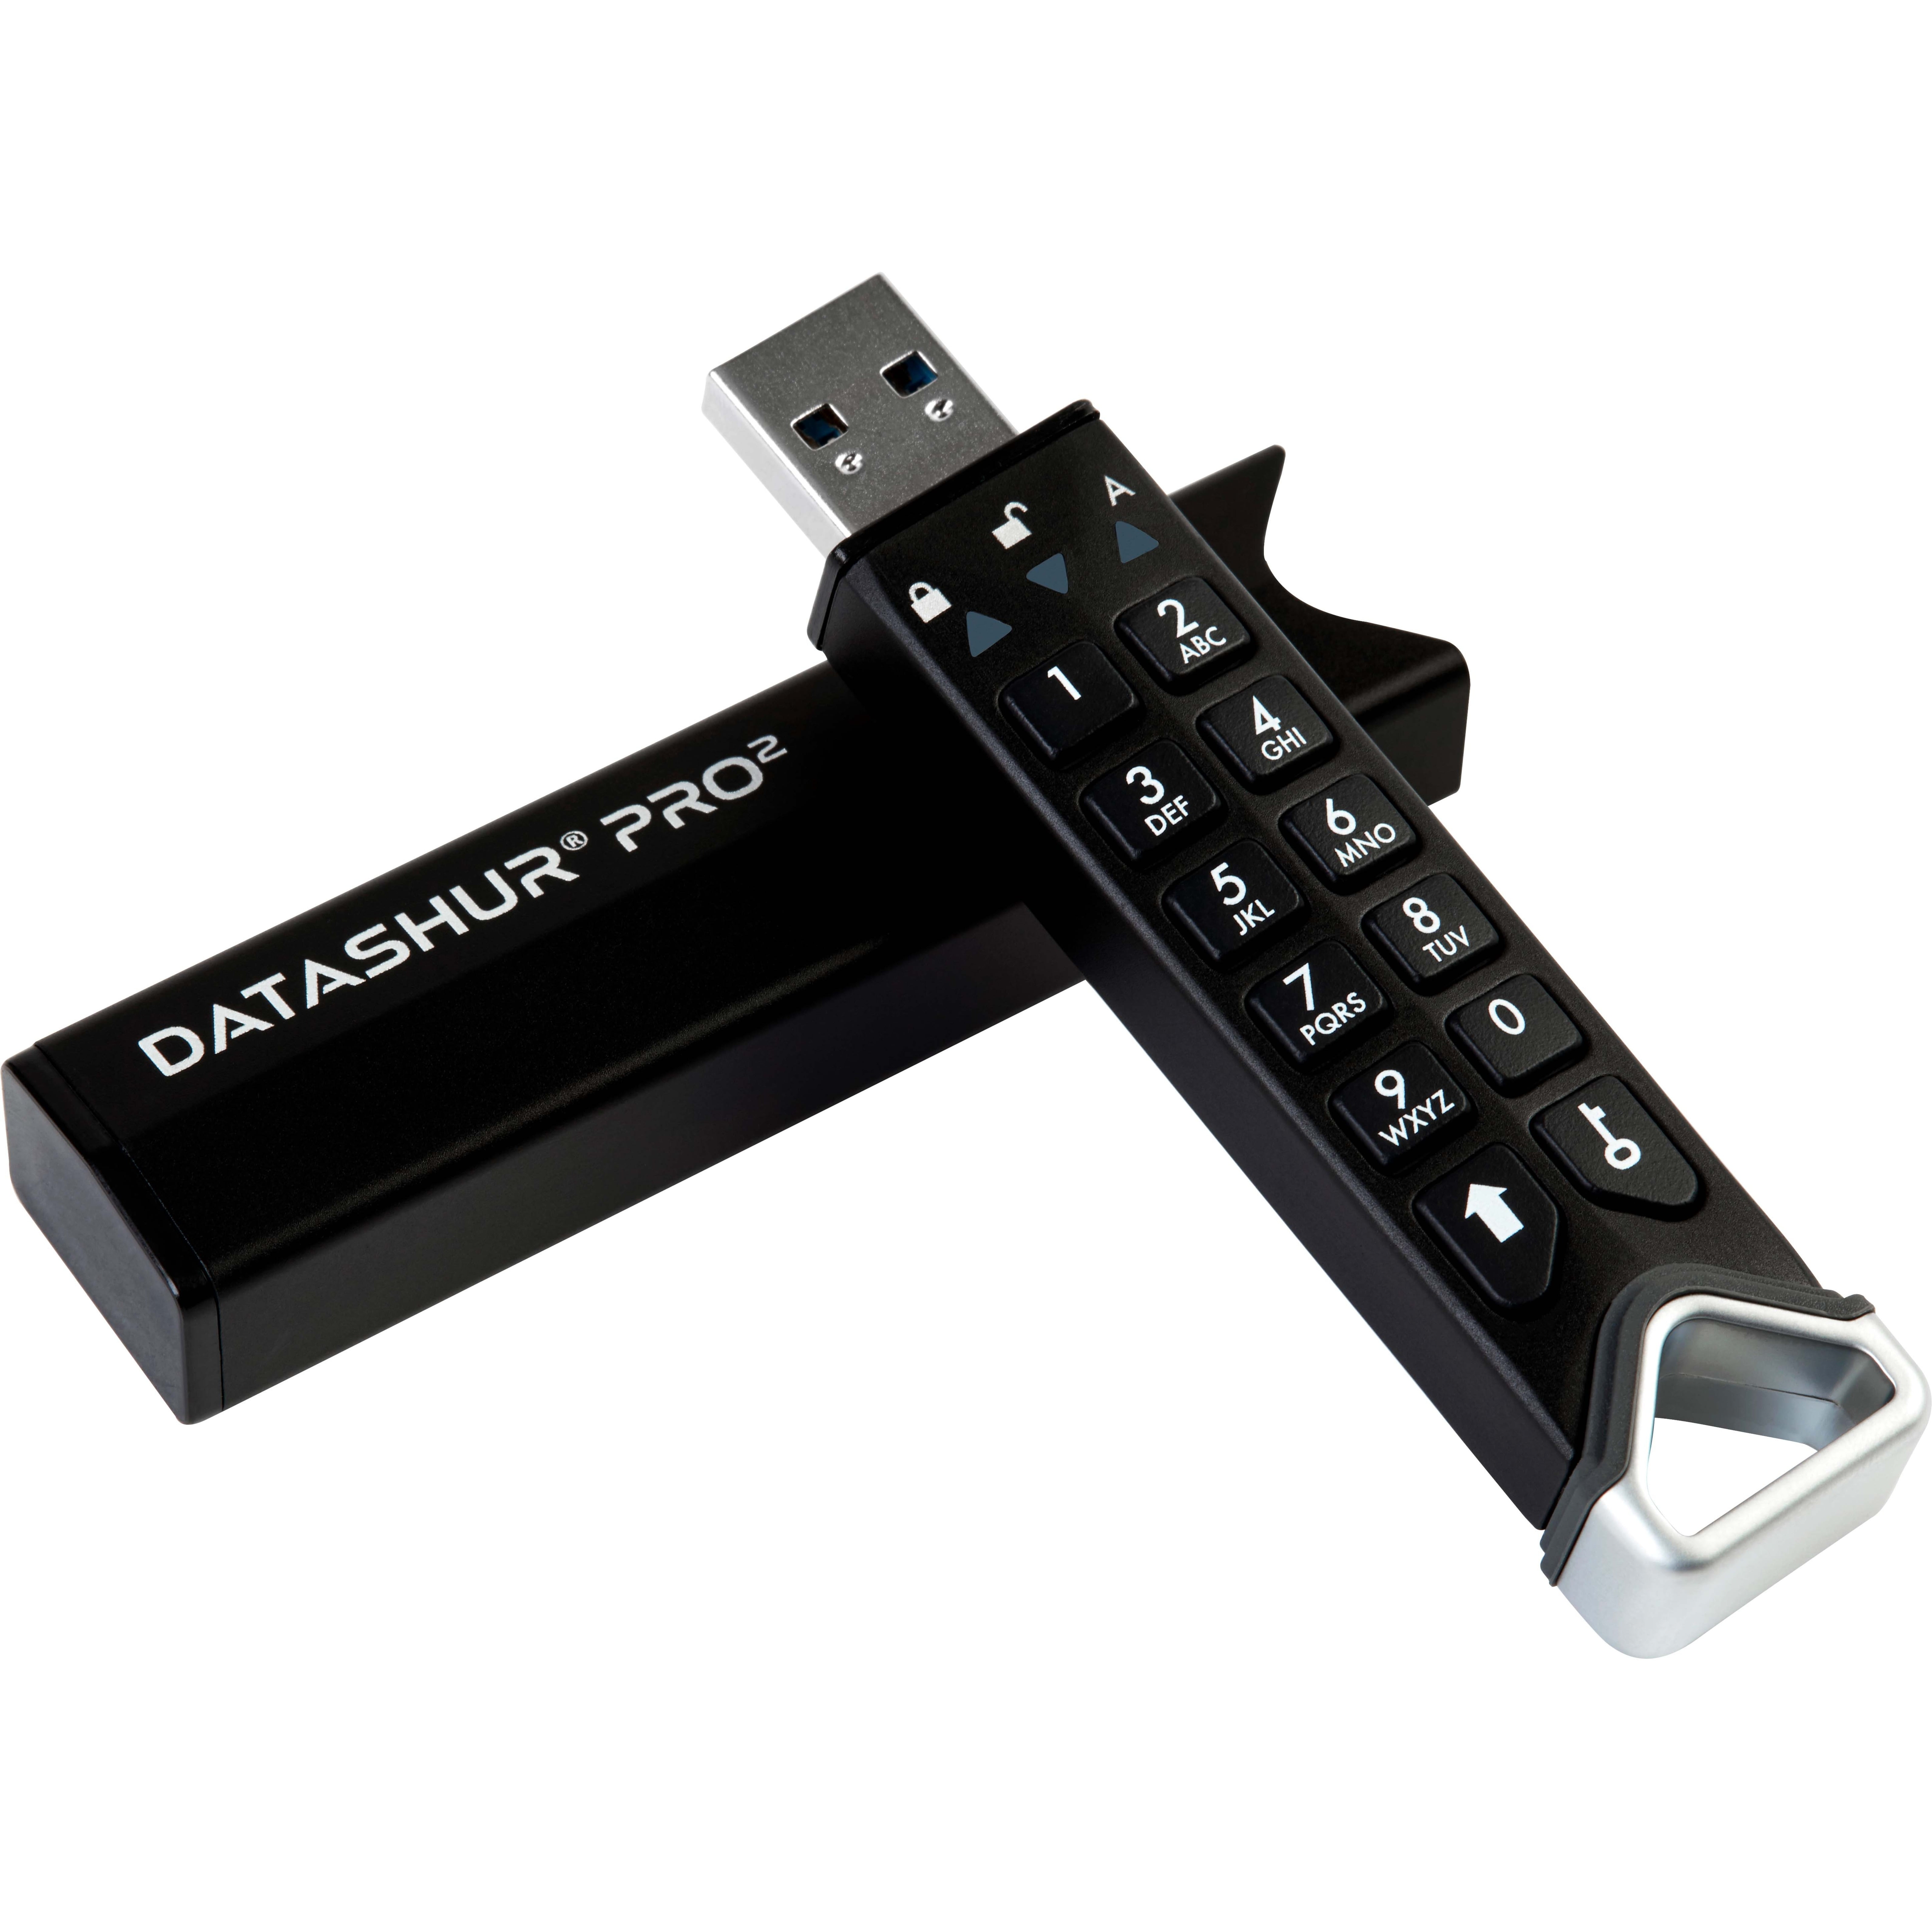 SANOXY MicroSDHC to Memory Stick Pro Duo MICRO SD Adaptor